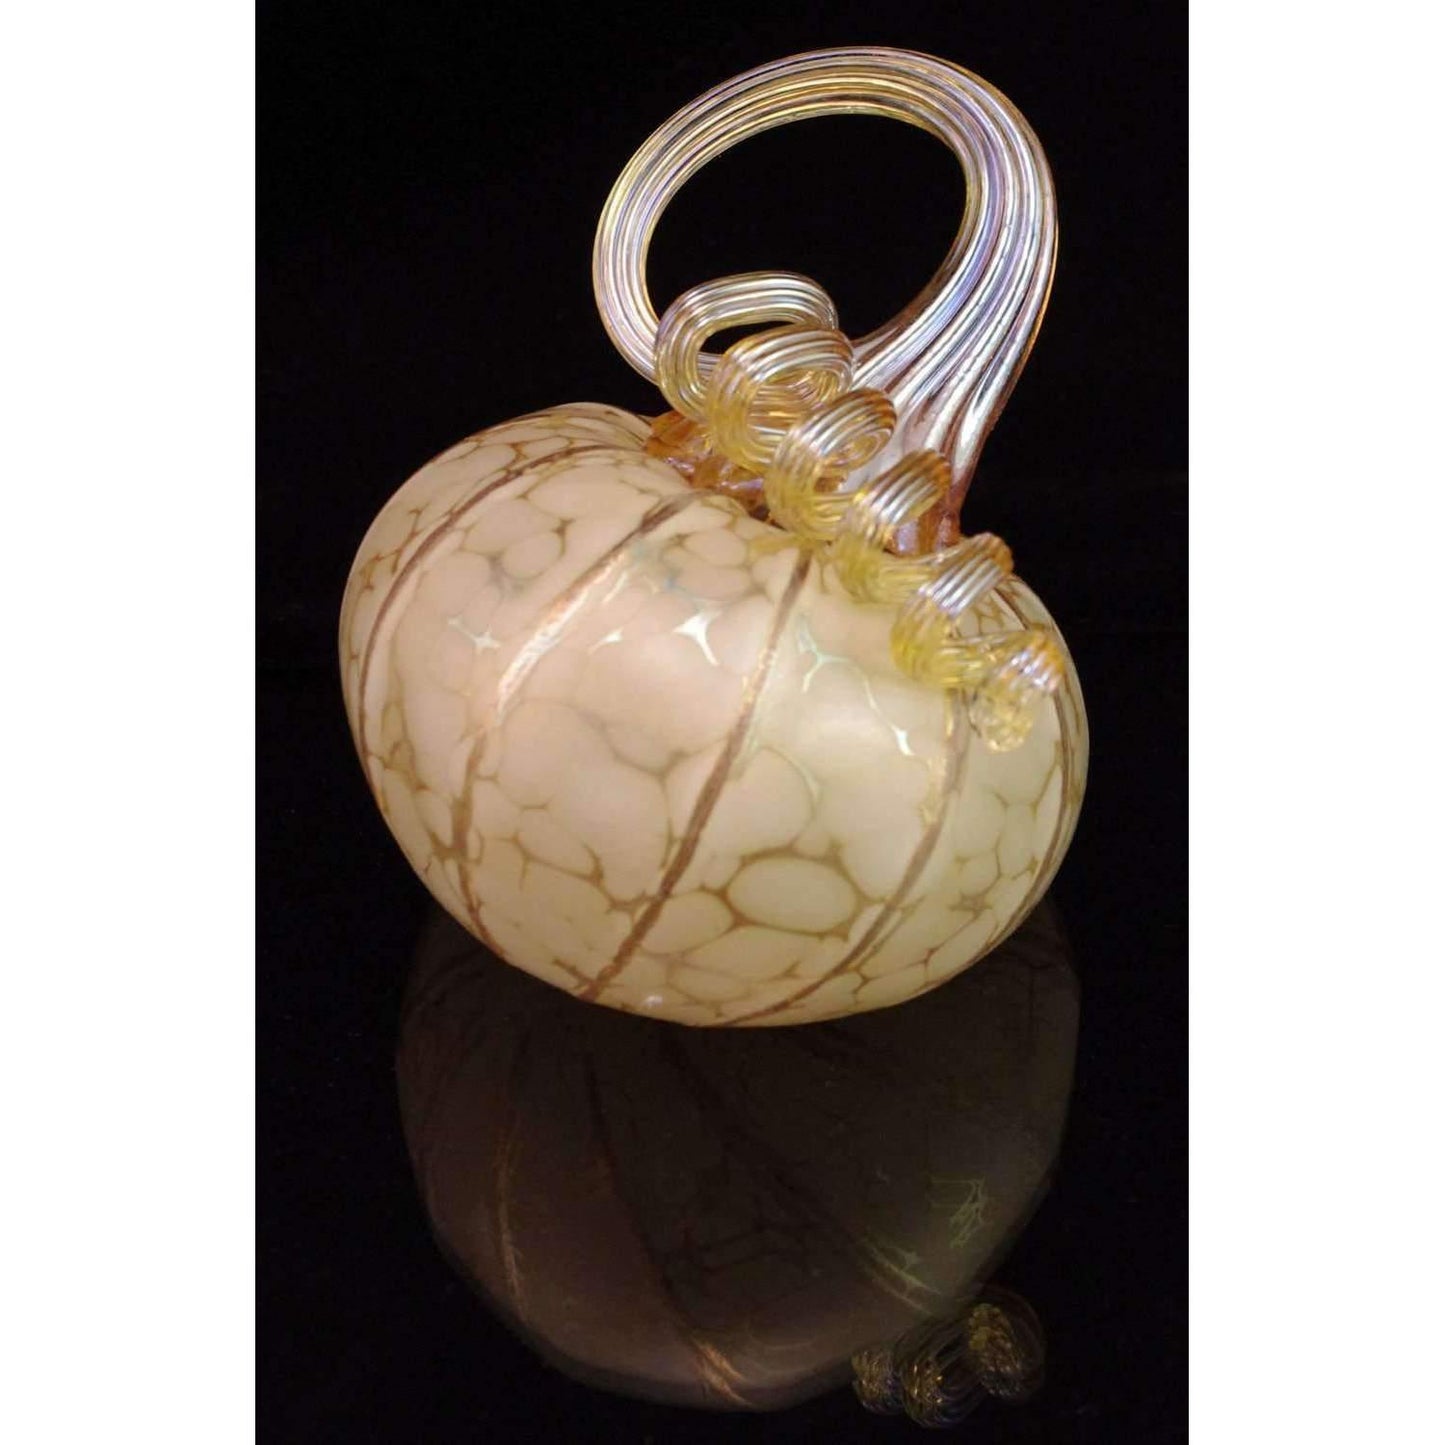 Tilted Blown Glass Pumpkin in Ivory Gifts Furnace Glass Works Regular 